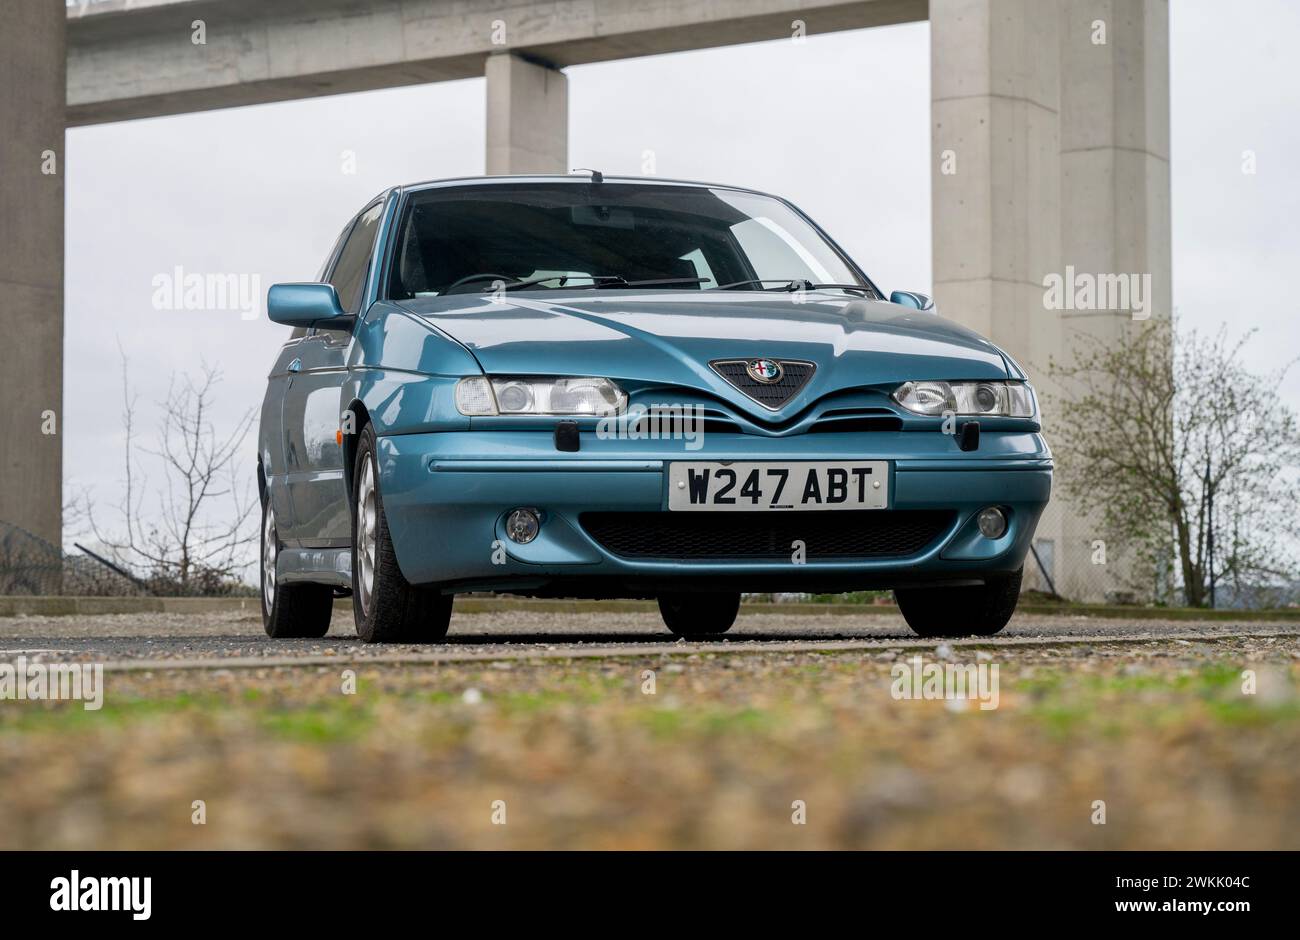 Alfa Romeo 145 Cloverleaf, Phase 2 facelift in Azzurro Fantasia blue from year 2000 Stock Photo